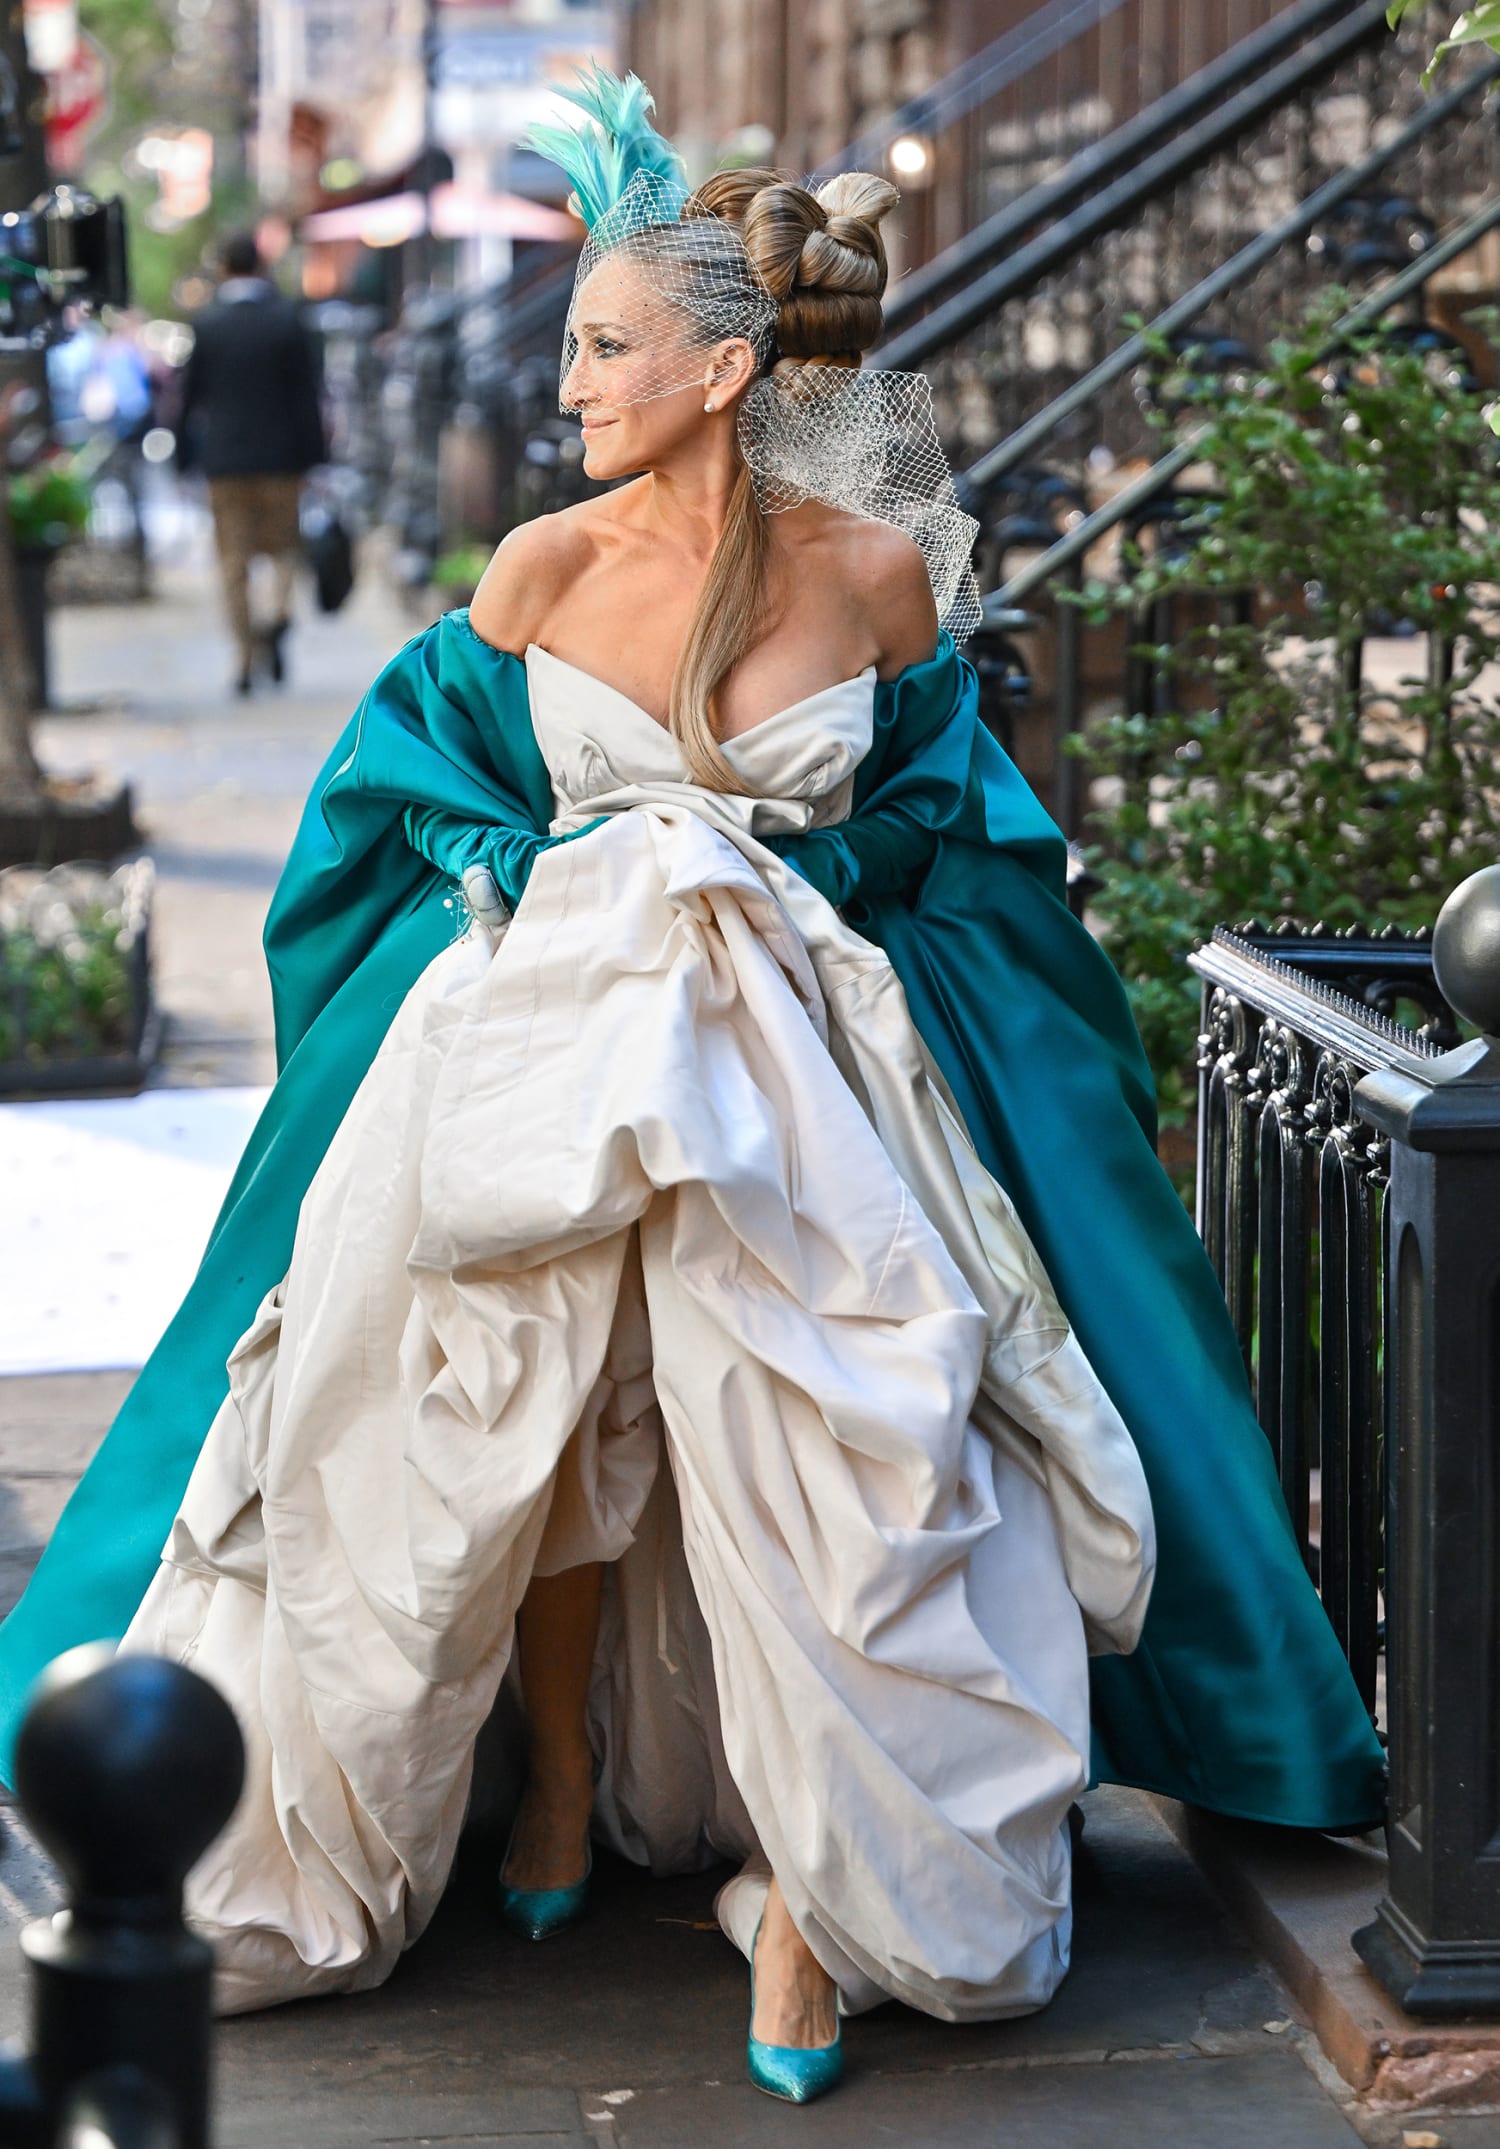 Sarah Jessica Parker Brings Back Carrie's Wedding Dress in 'AJLT